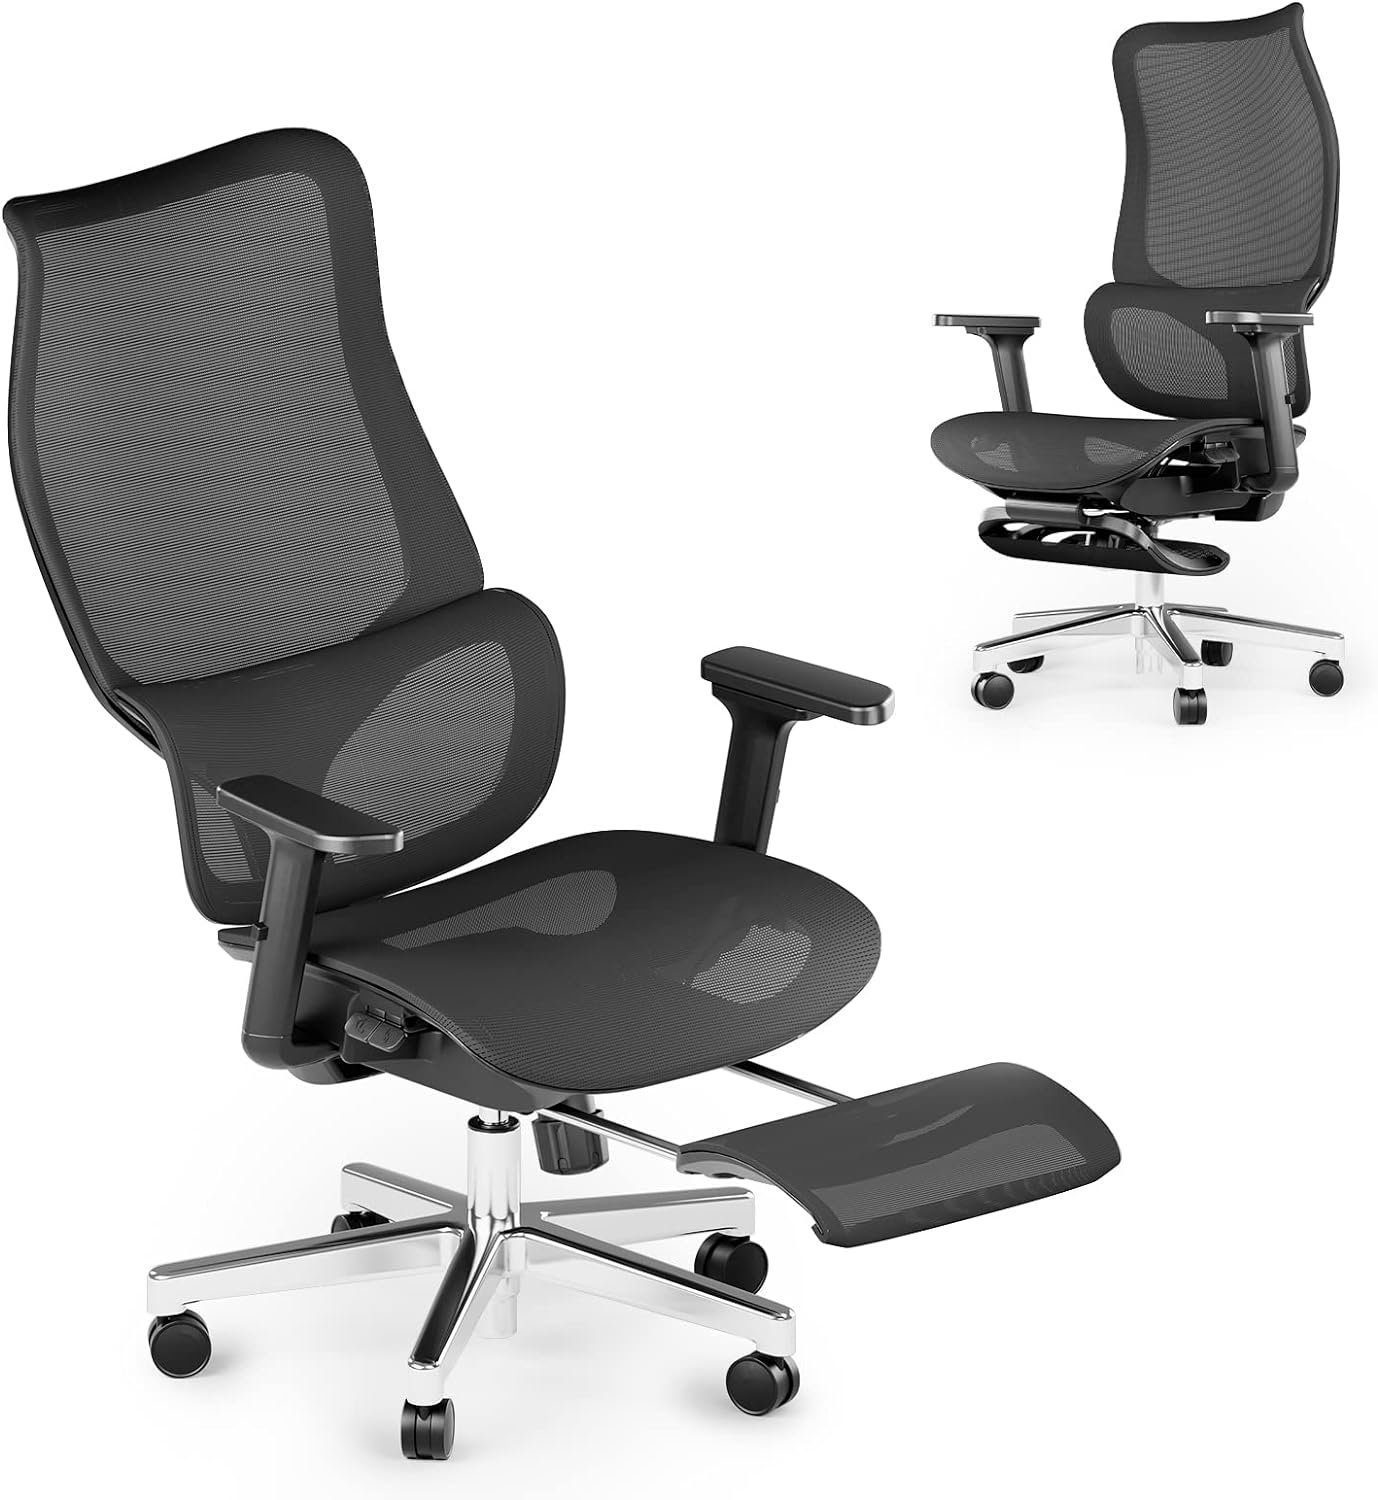 JOYFLY Gaming-Stuhl (Gamer-Stuhl: Ergonomischer Gaming-Stuhl mit Lendenwirbelstütze), Bürostuhl mit Fußstütze, Bürostuhl Ergonomisch, Büro-Liegestuhl